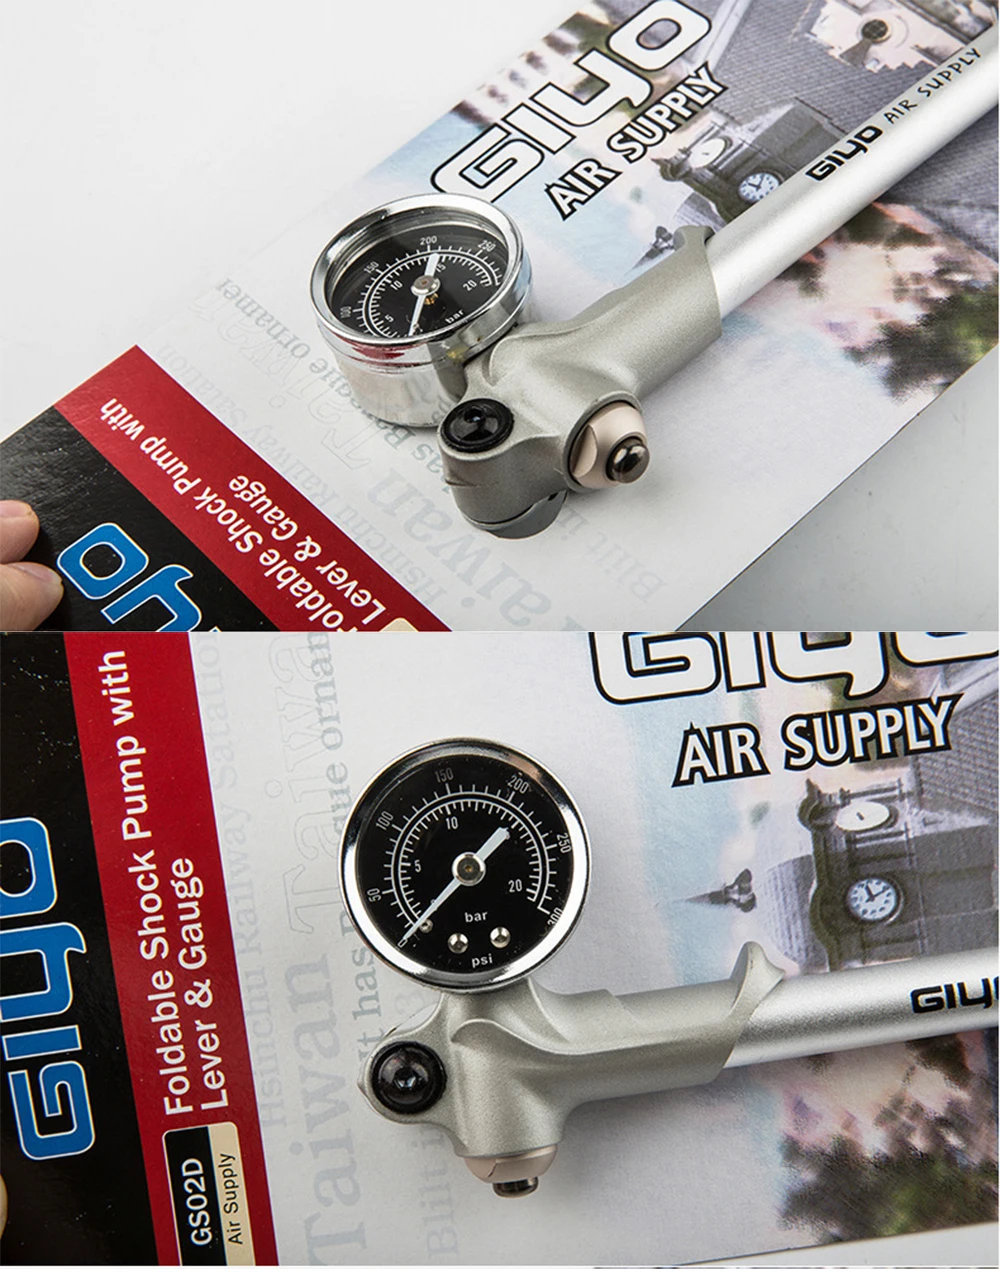 GIYO GS-02D พับ300psi แรงดันสูงจักรยาน Air Shock ปั๊ม Lever & Gauge สำหรับส้อมด้านหลัง Suspension จักรยานภูเขา